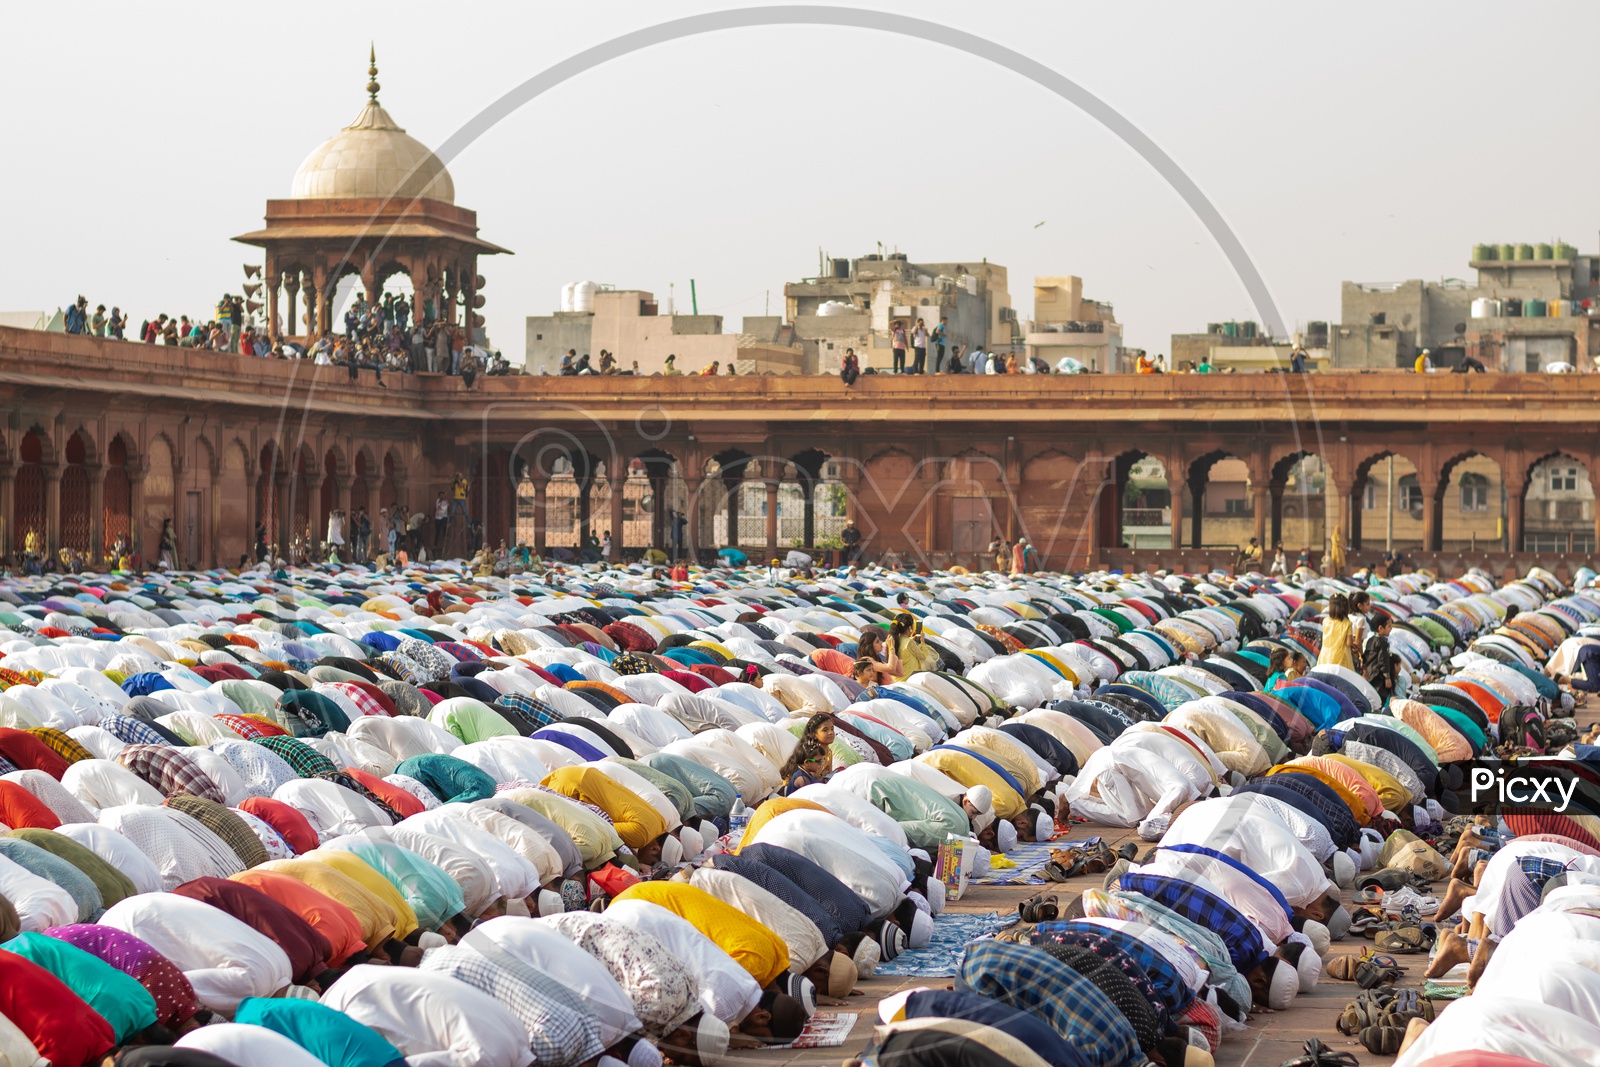 Men Praying Namaz on the day of Eid-ul-Fitr (End of the holy month of Ramadan) at Jama Masjid, Delhi